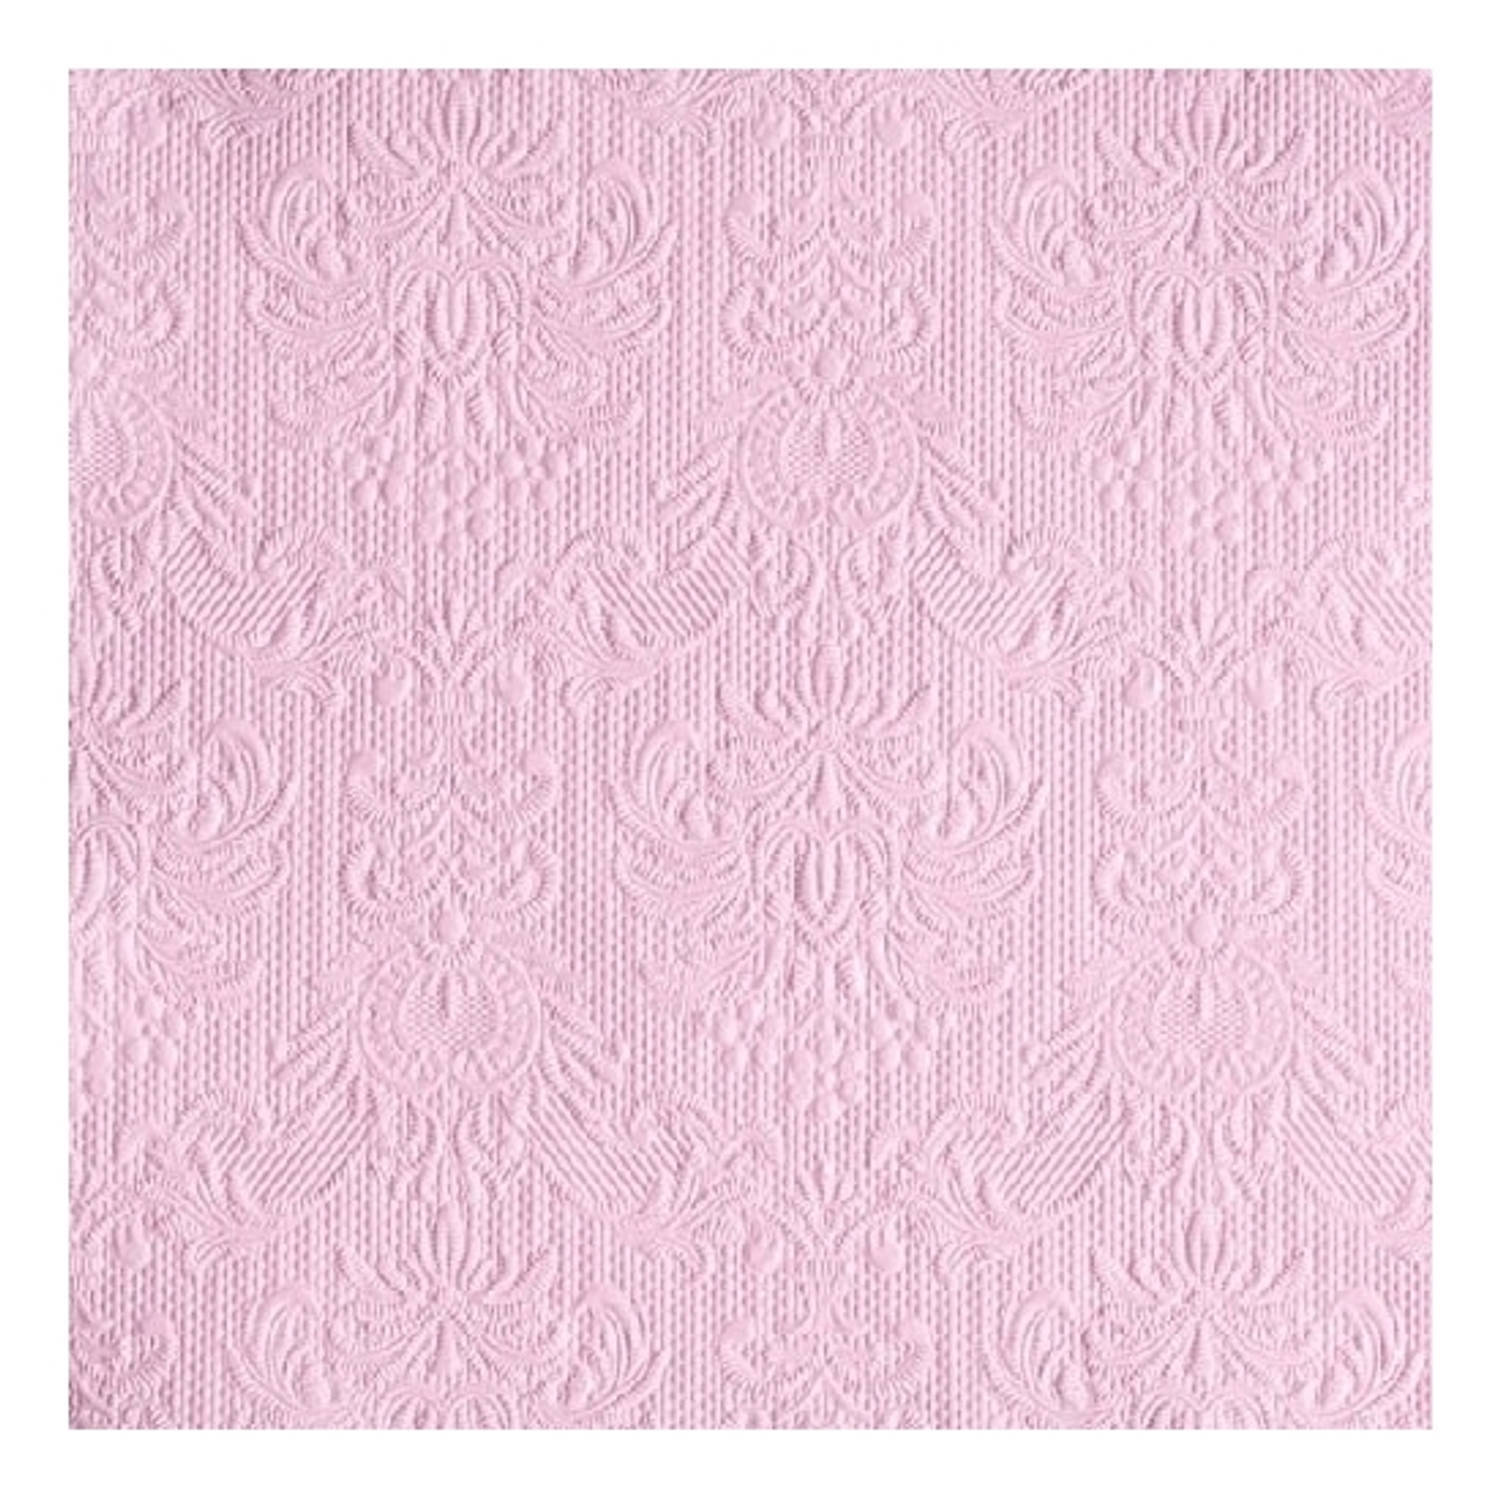 Ambiente 45x stuks Servetten roze barok stijl 3-laags - elegance - barok patroon - Feest artikelen - feest decoraties